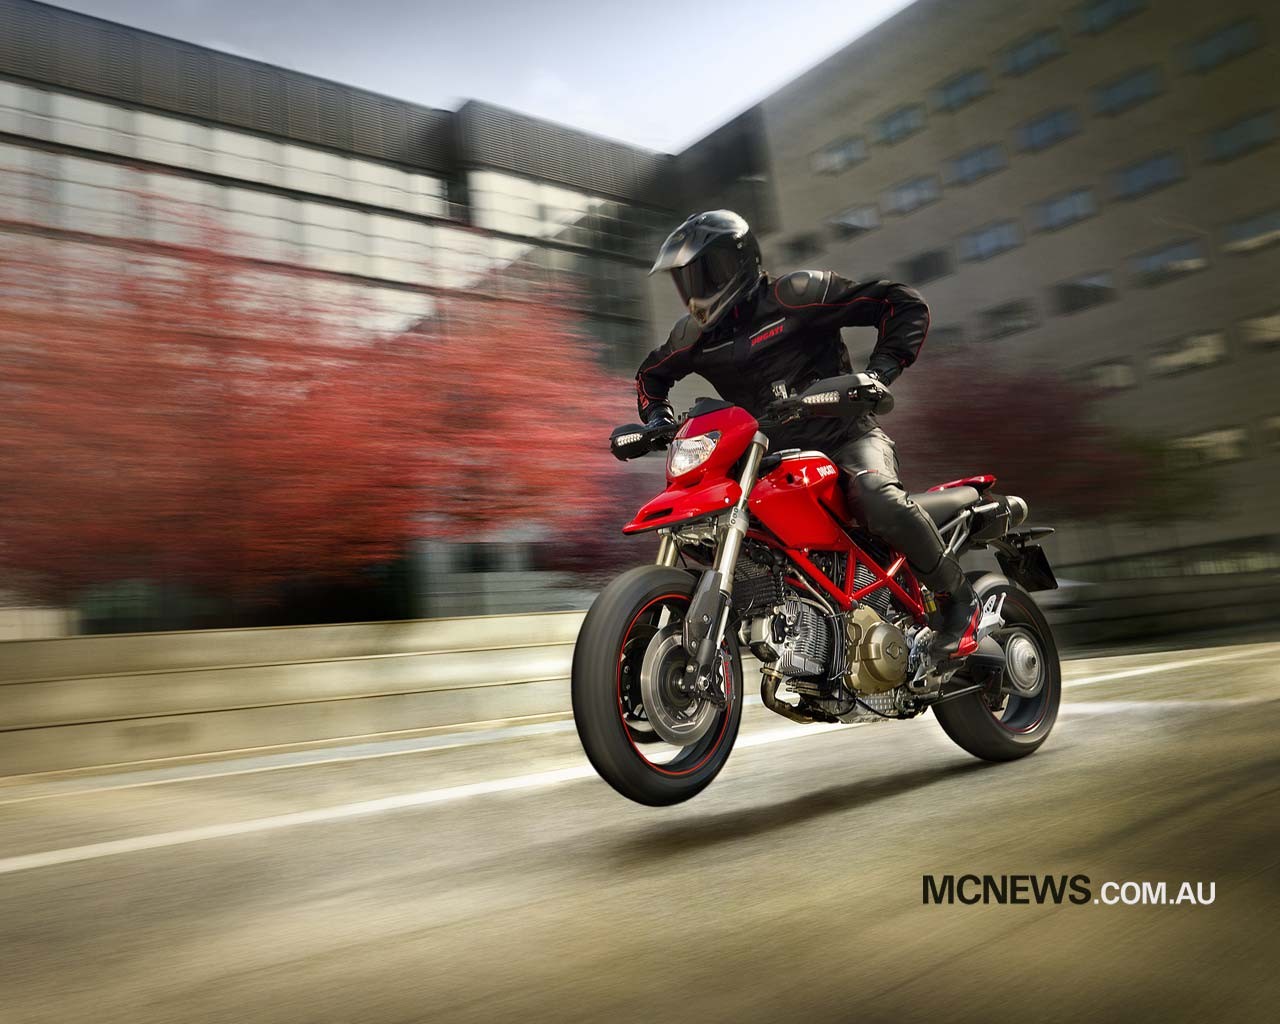 General 1280x1024 Ducati motorcycle hypermotard Red Motorcycles vehicle Italian motorcycles Volkswagen Group